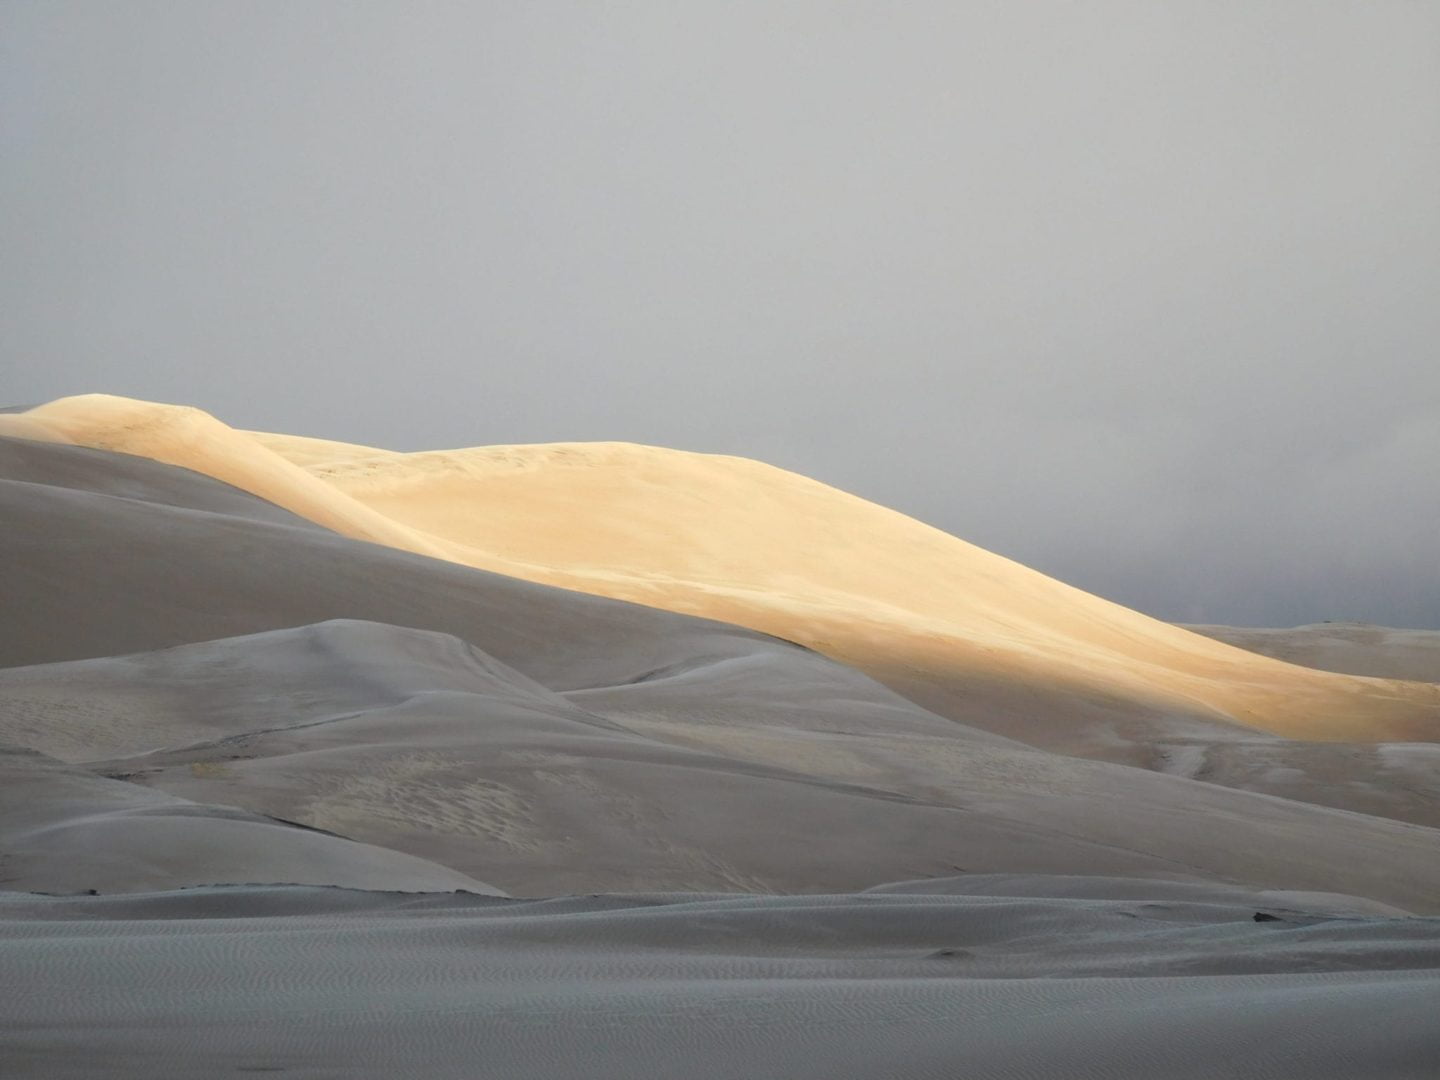 Great Sand Dunes National Park (8,700′), Sangre de Cristo Range